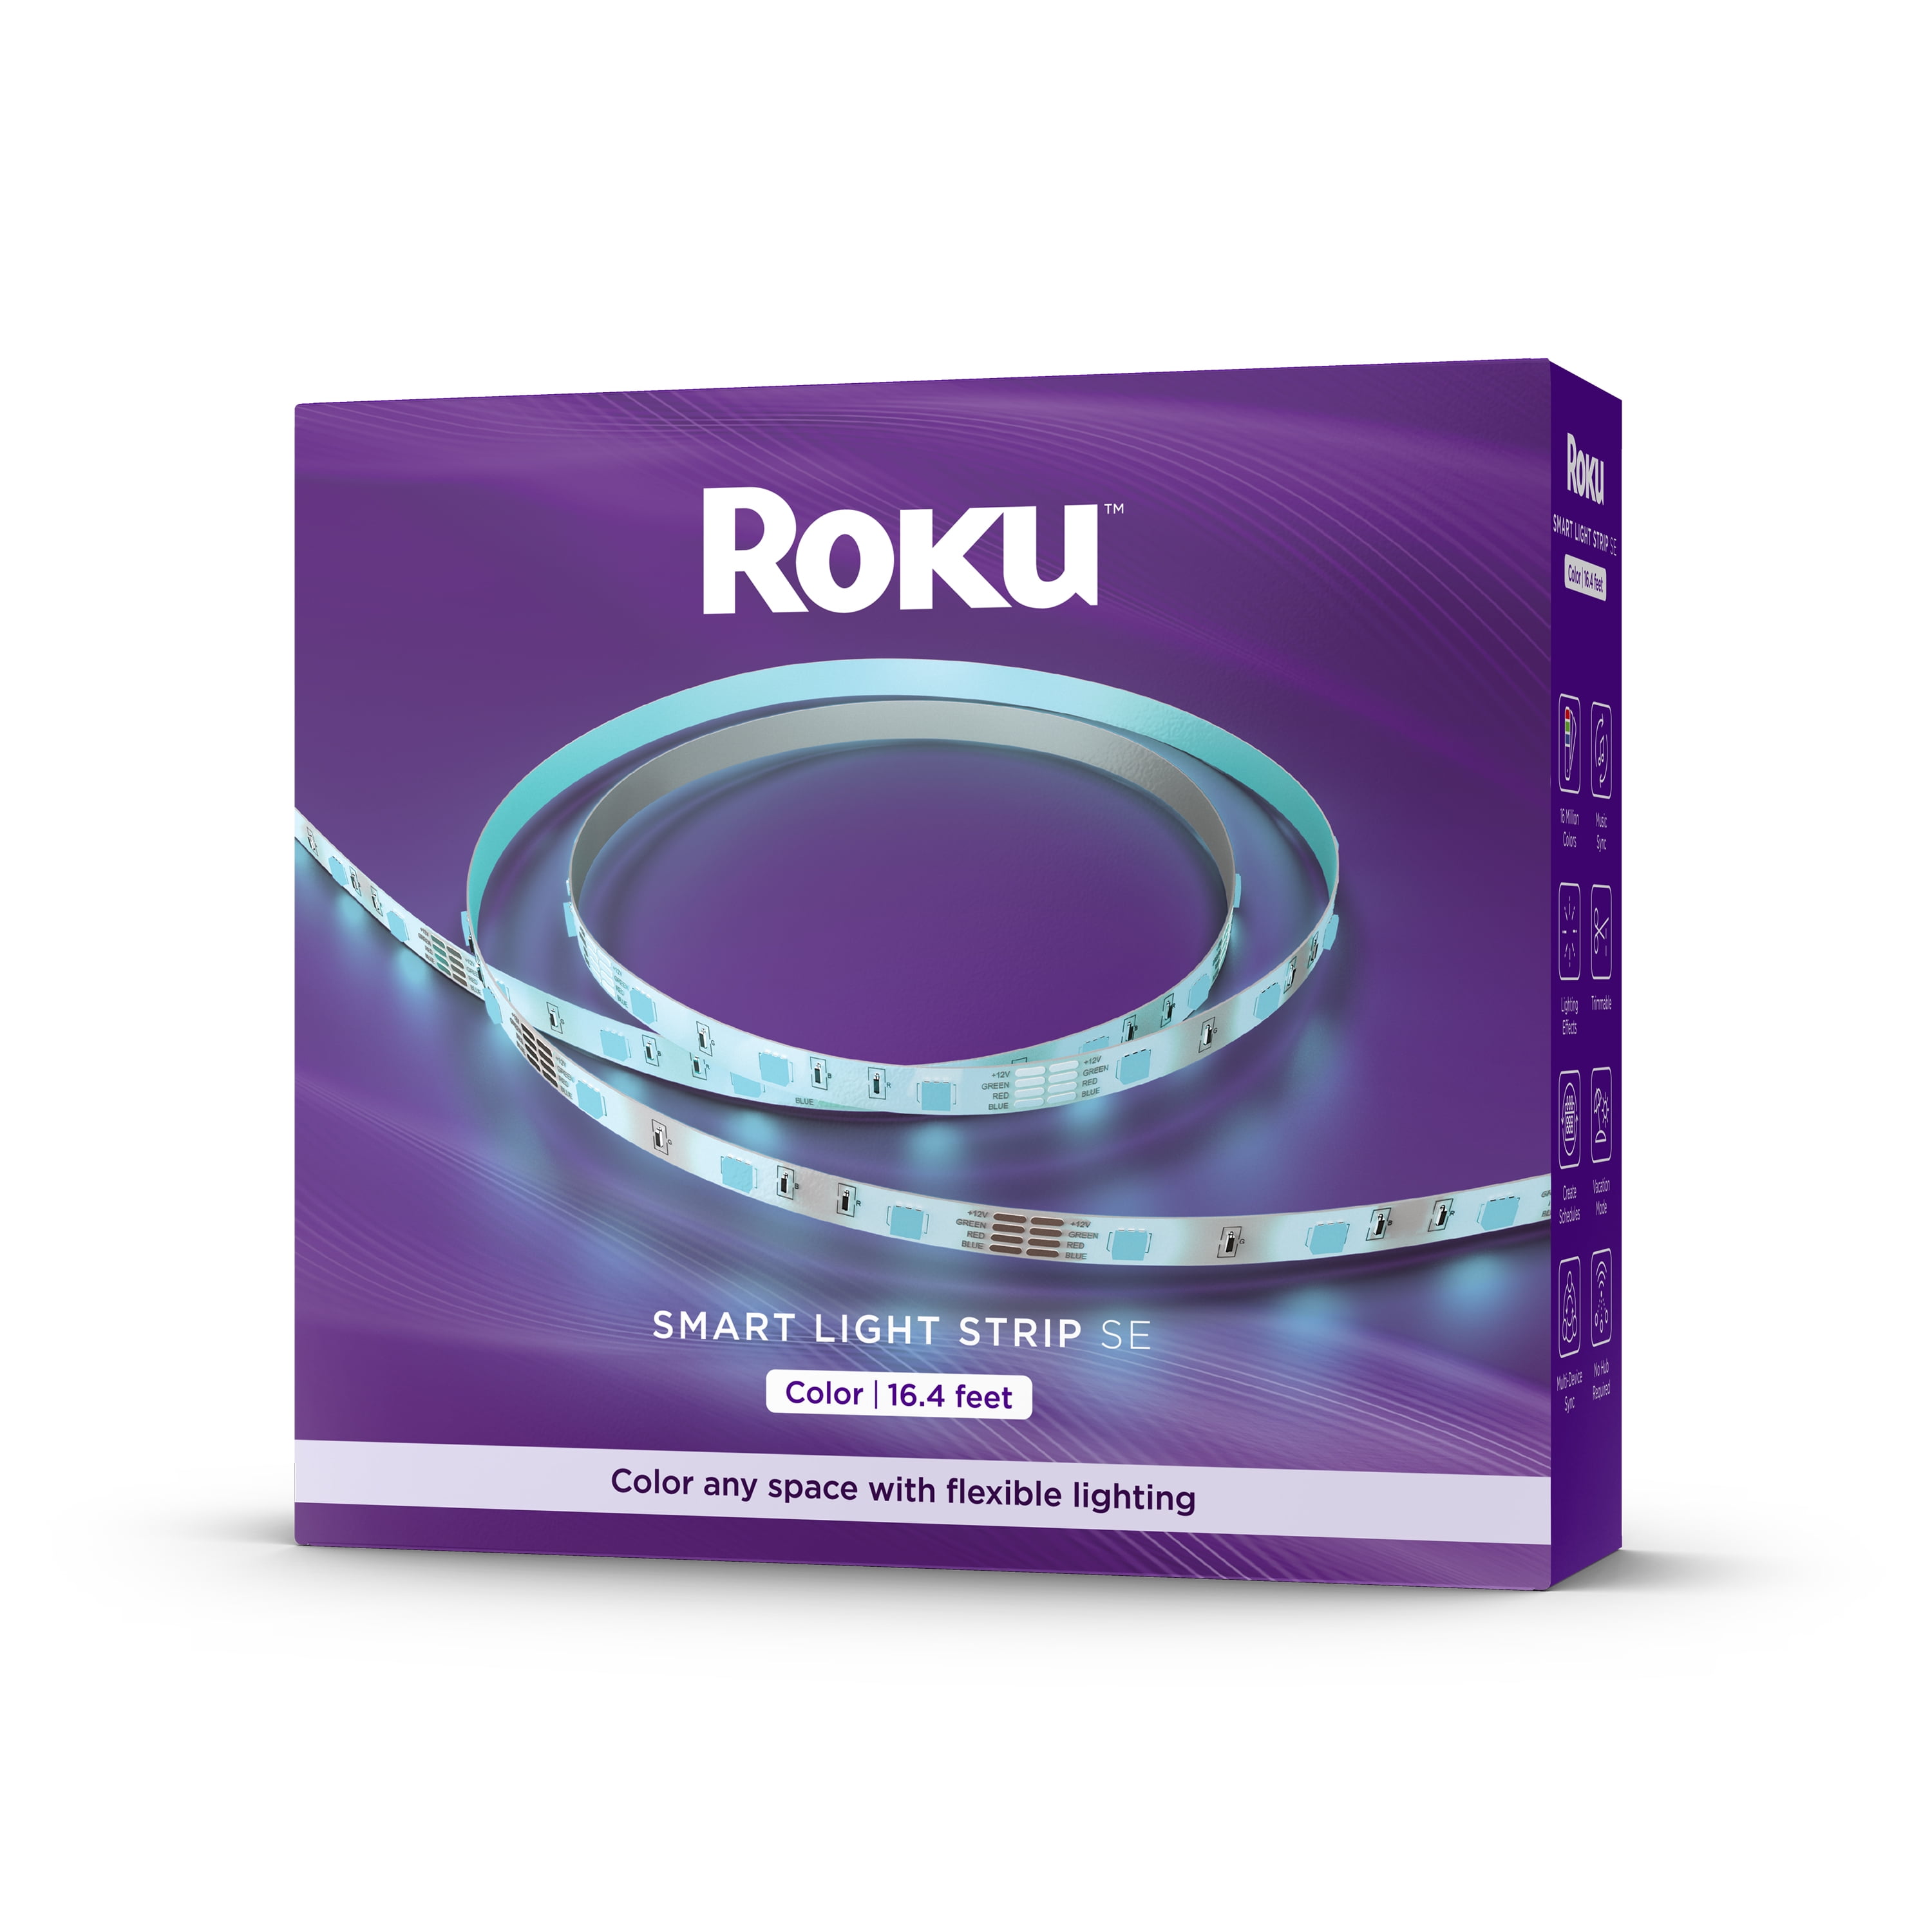 Roku Smart Home Smart Light Strip SE 16.4 Foot  with 16 Million Color Options, White Light Option, and Custom Presets